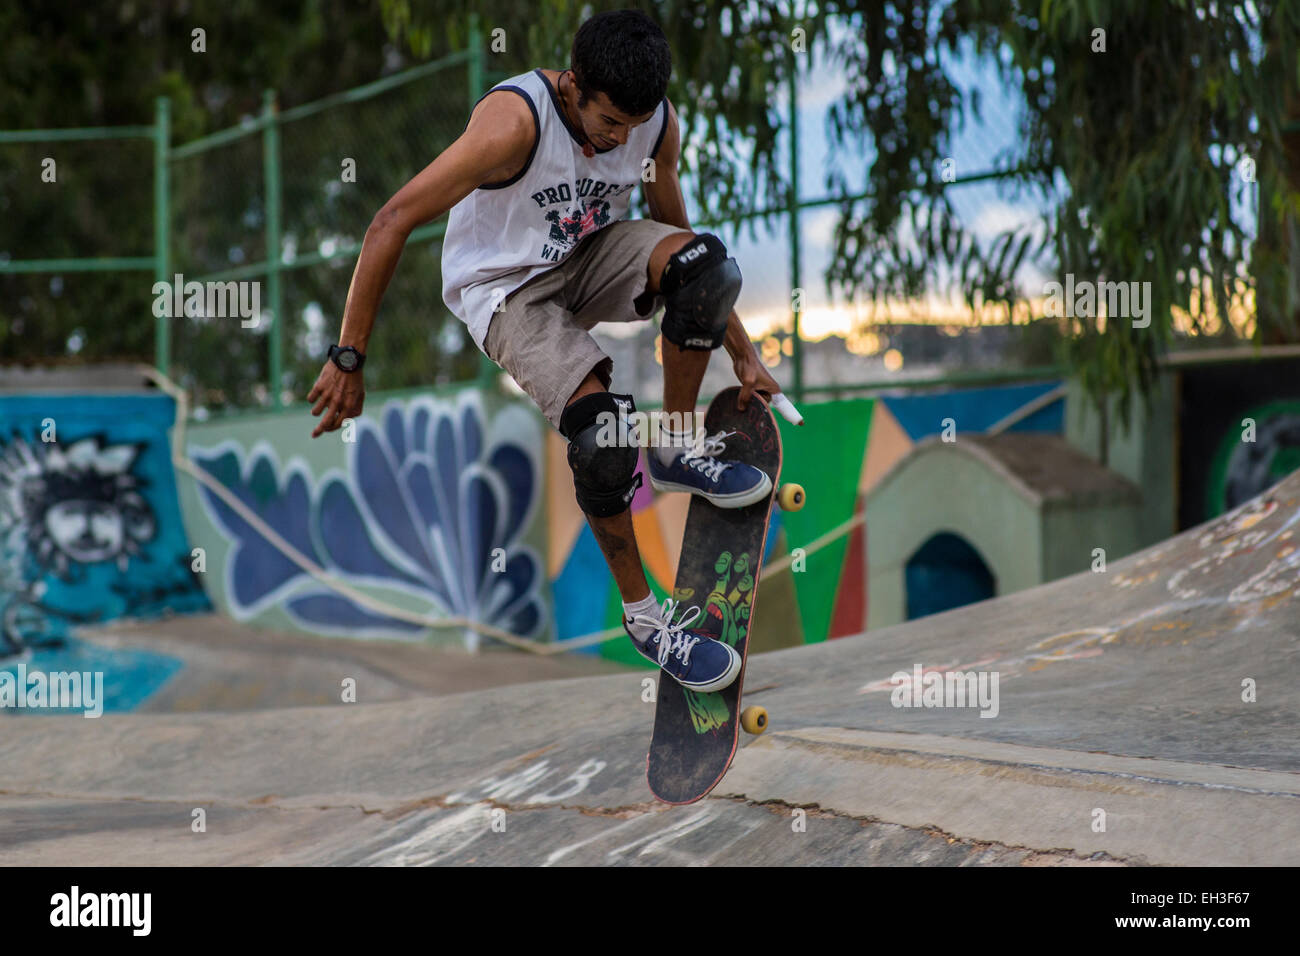 Indian skateboarder Gautham Kamath shot in the sunset at a skatepark in Bangalore, India Stock Photo